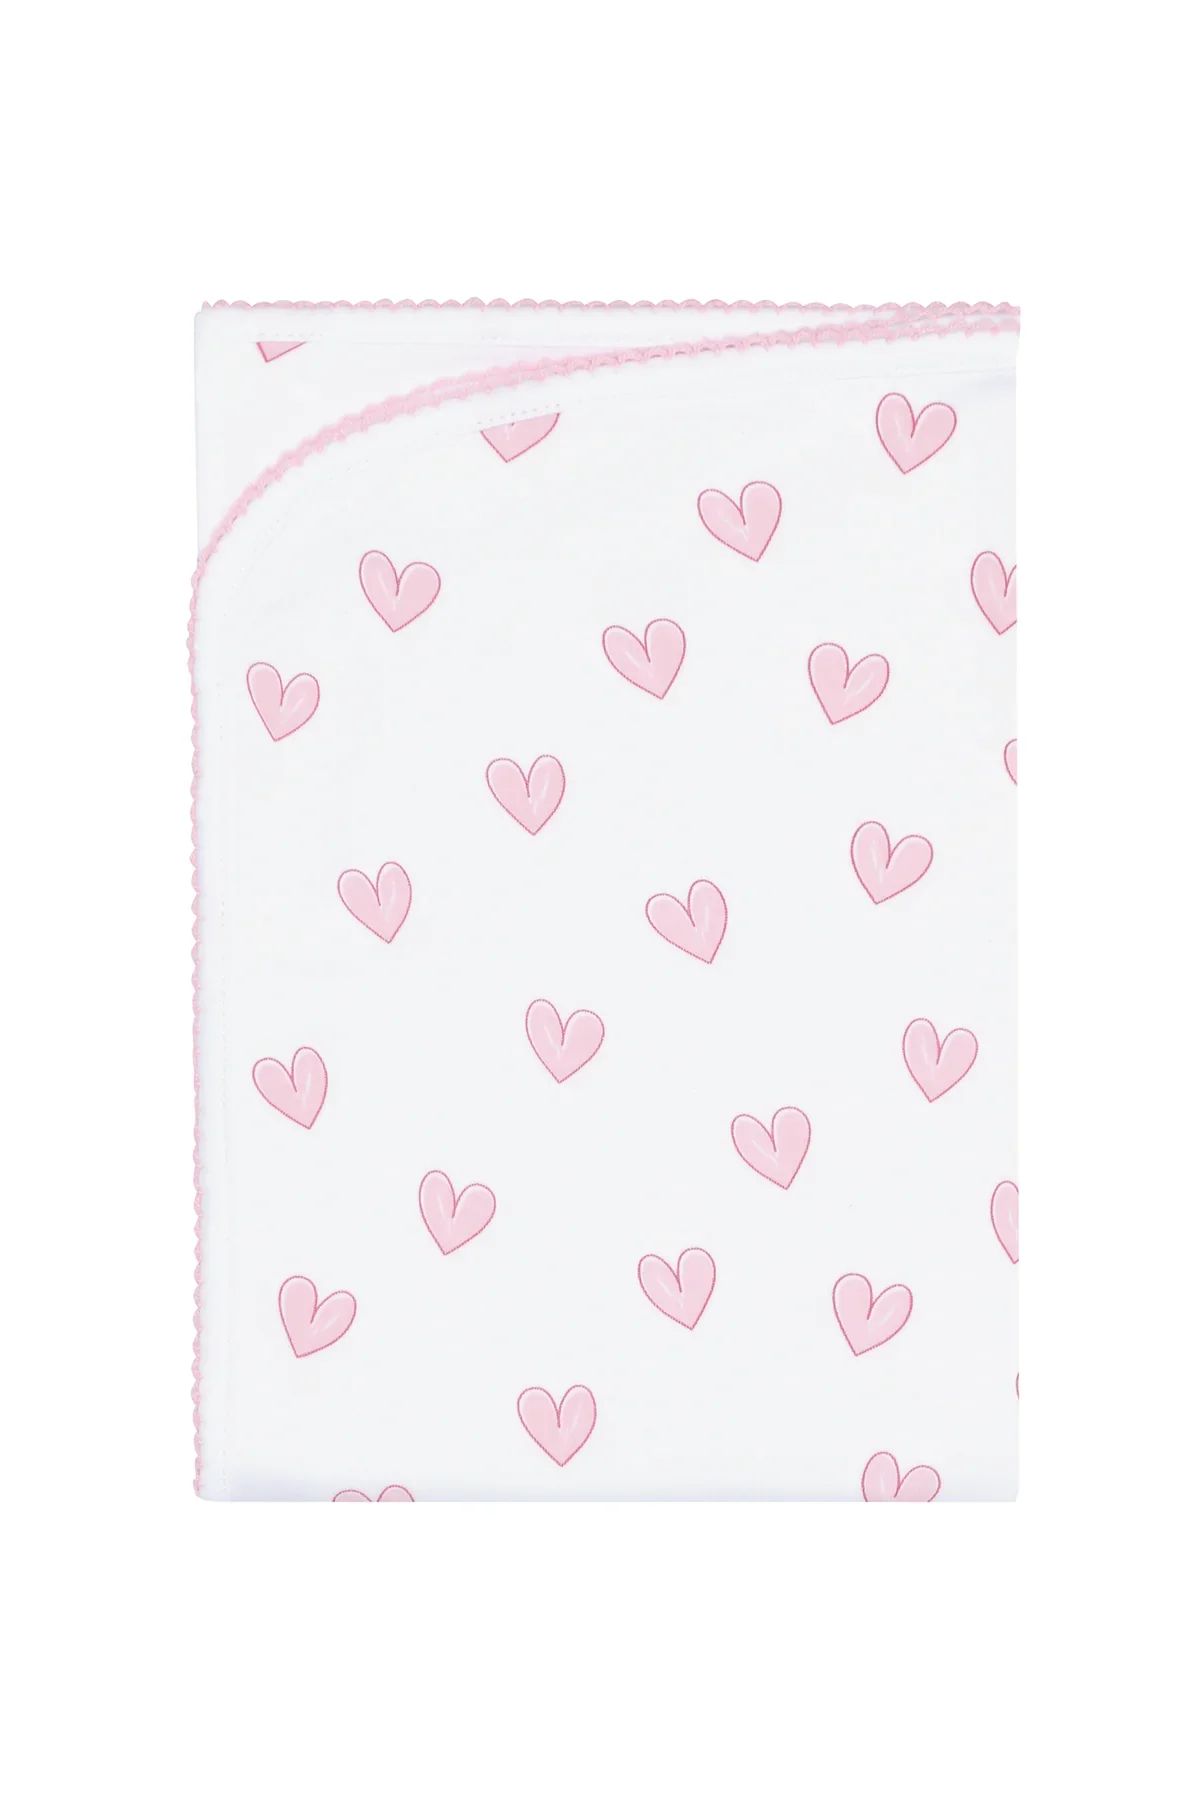 Nellapima Heart Print Blanket- Pink | JoJo Mommy